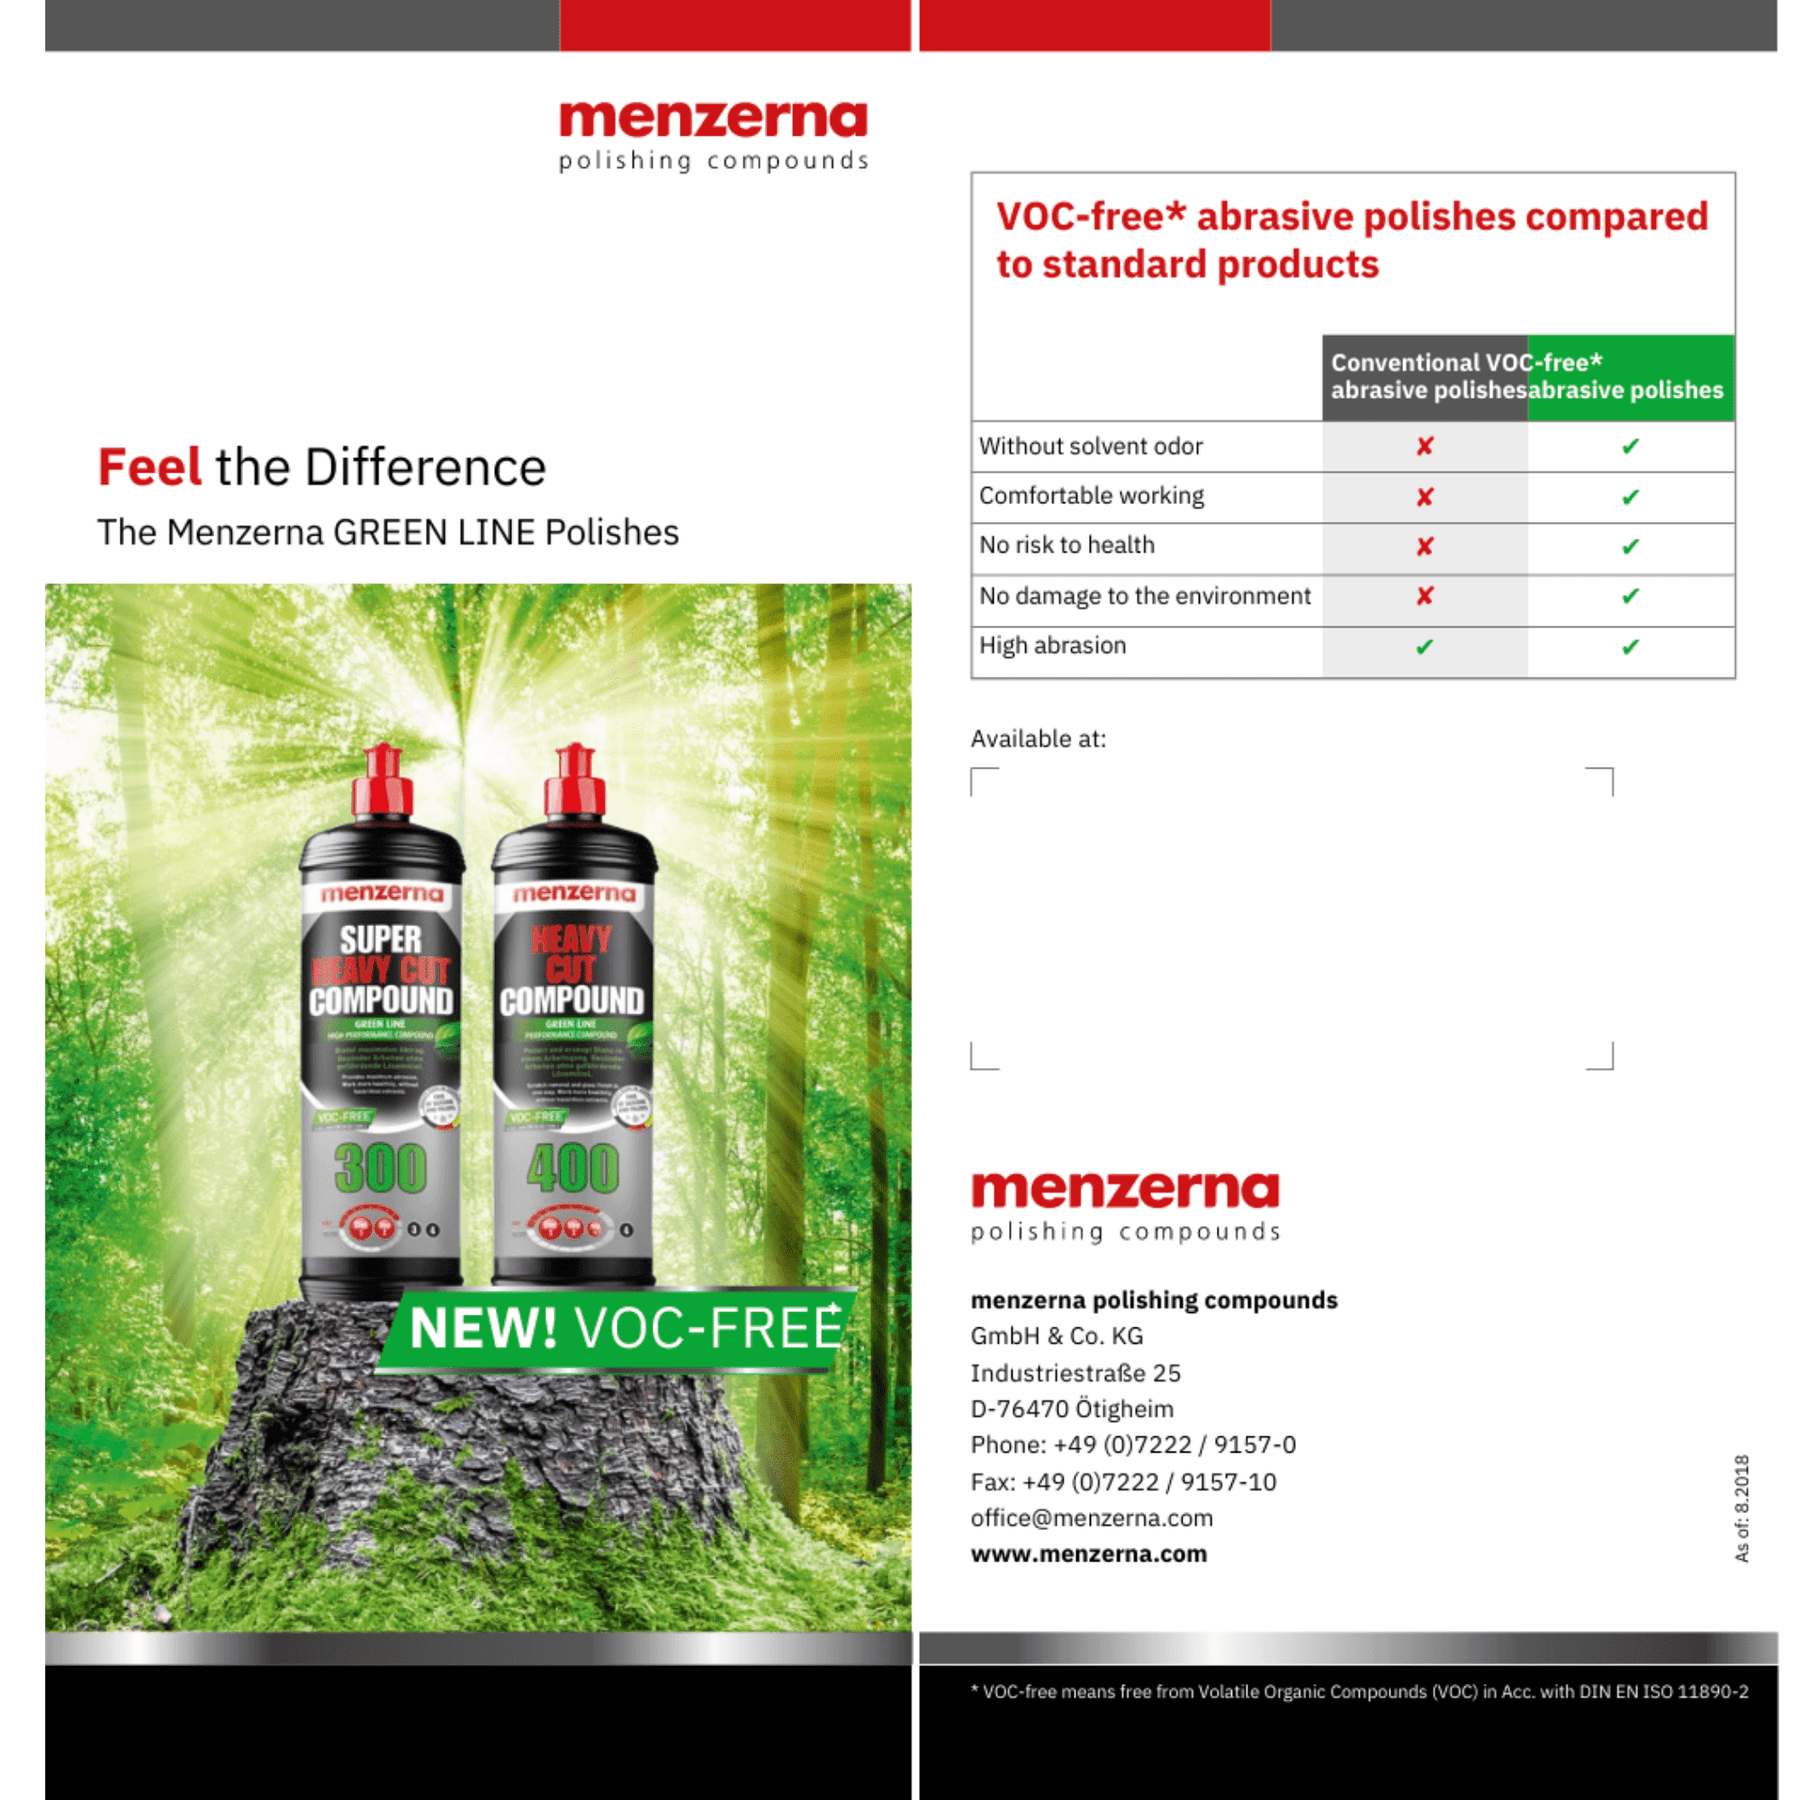 Heavy Cut Compound 400 Green Line - Environmentally Friendly Polishing Compounds - Maazzo